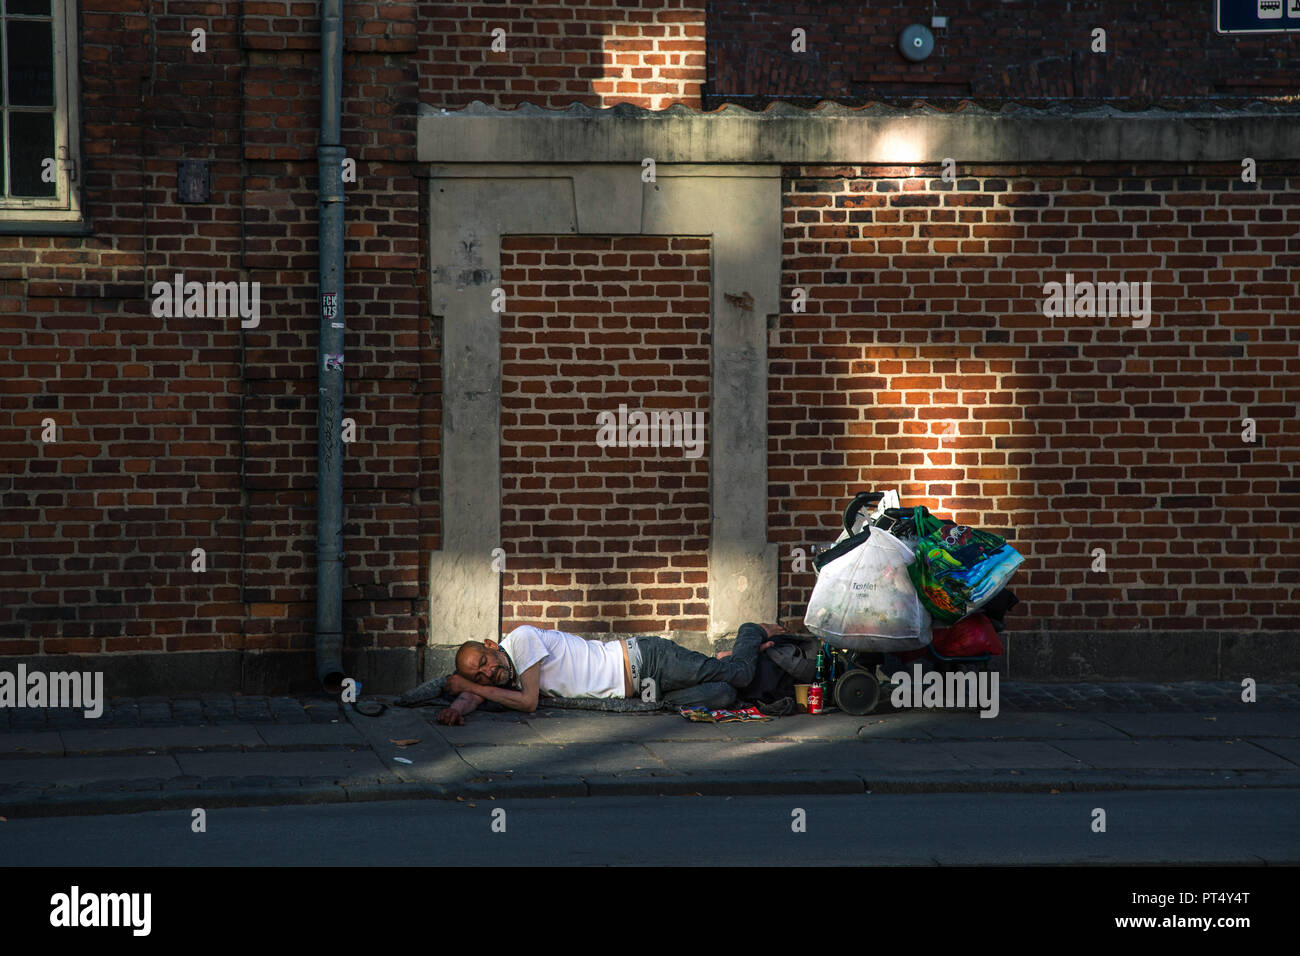 homeless asleep on the sidewalk in copenhagen Stock Photo